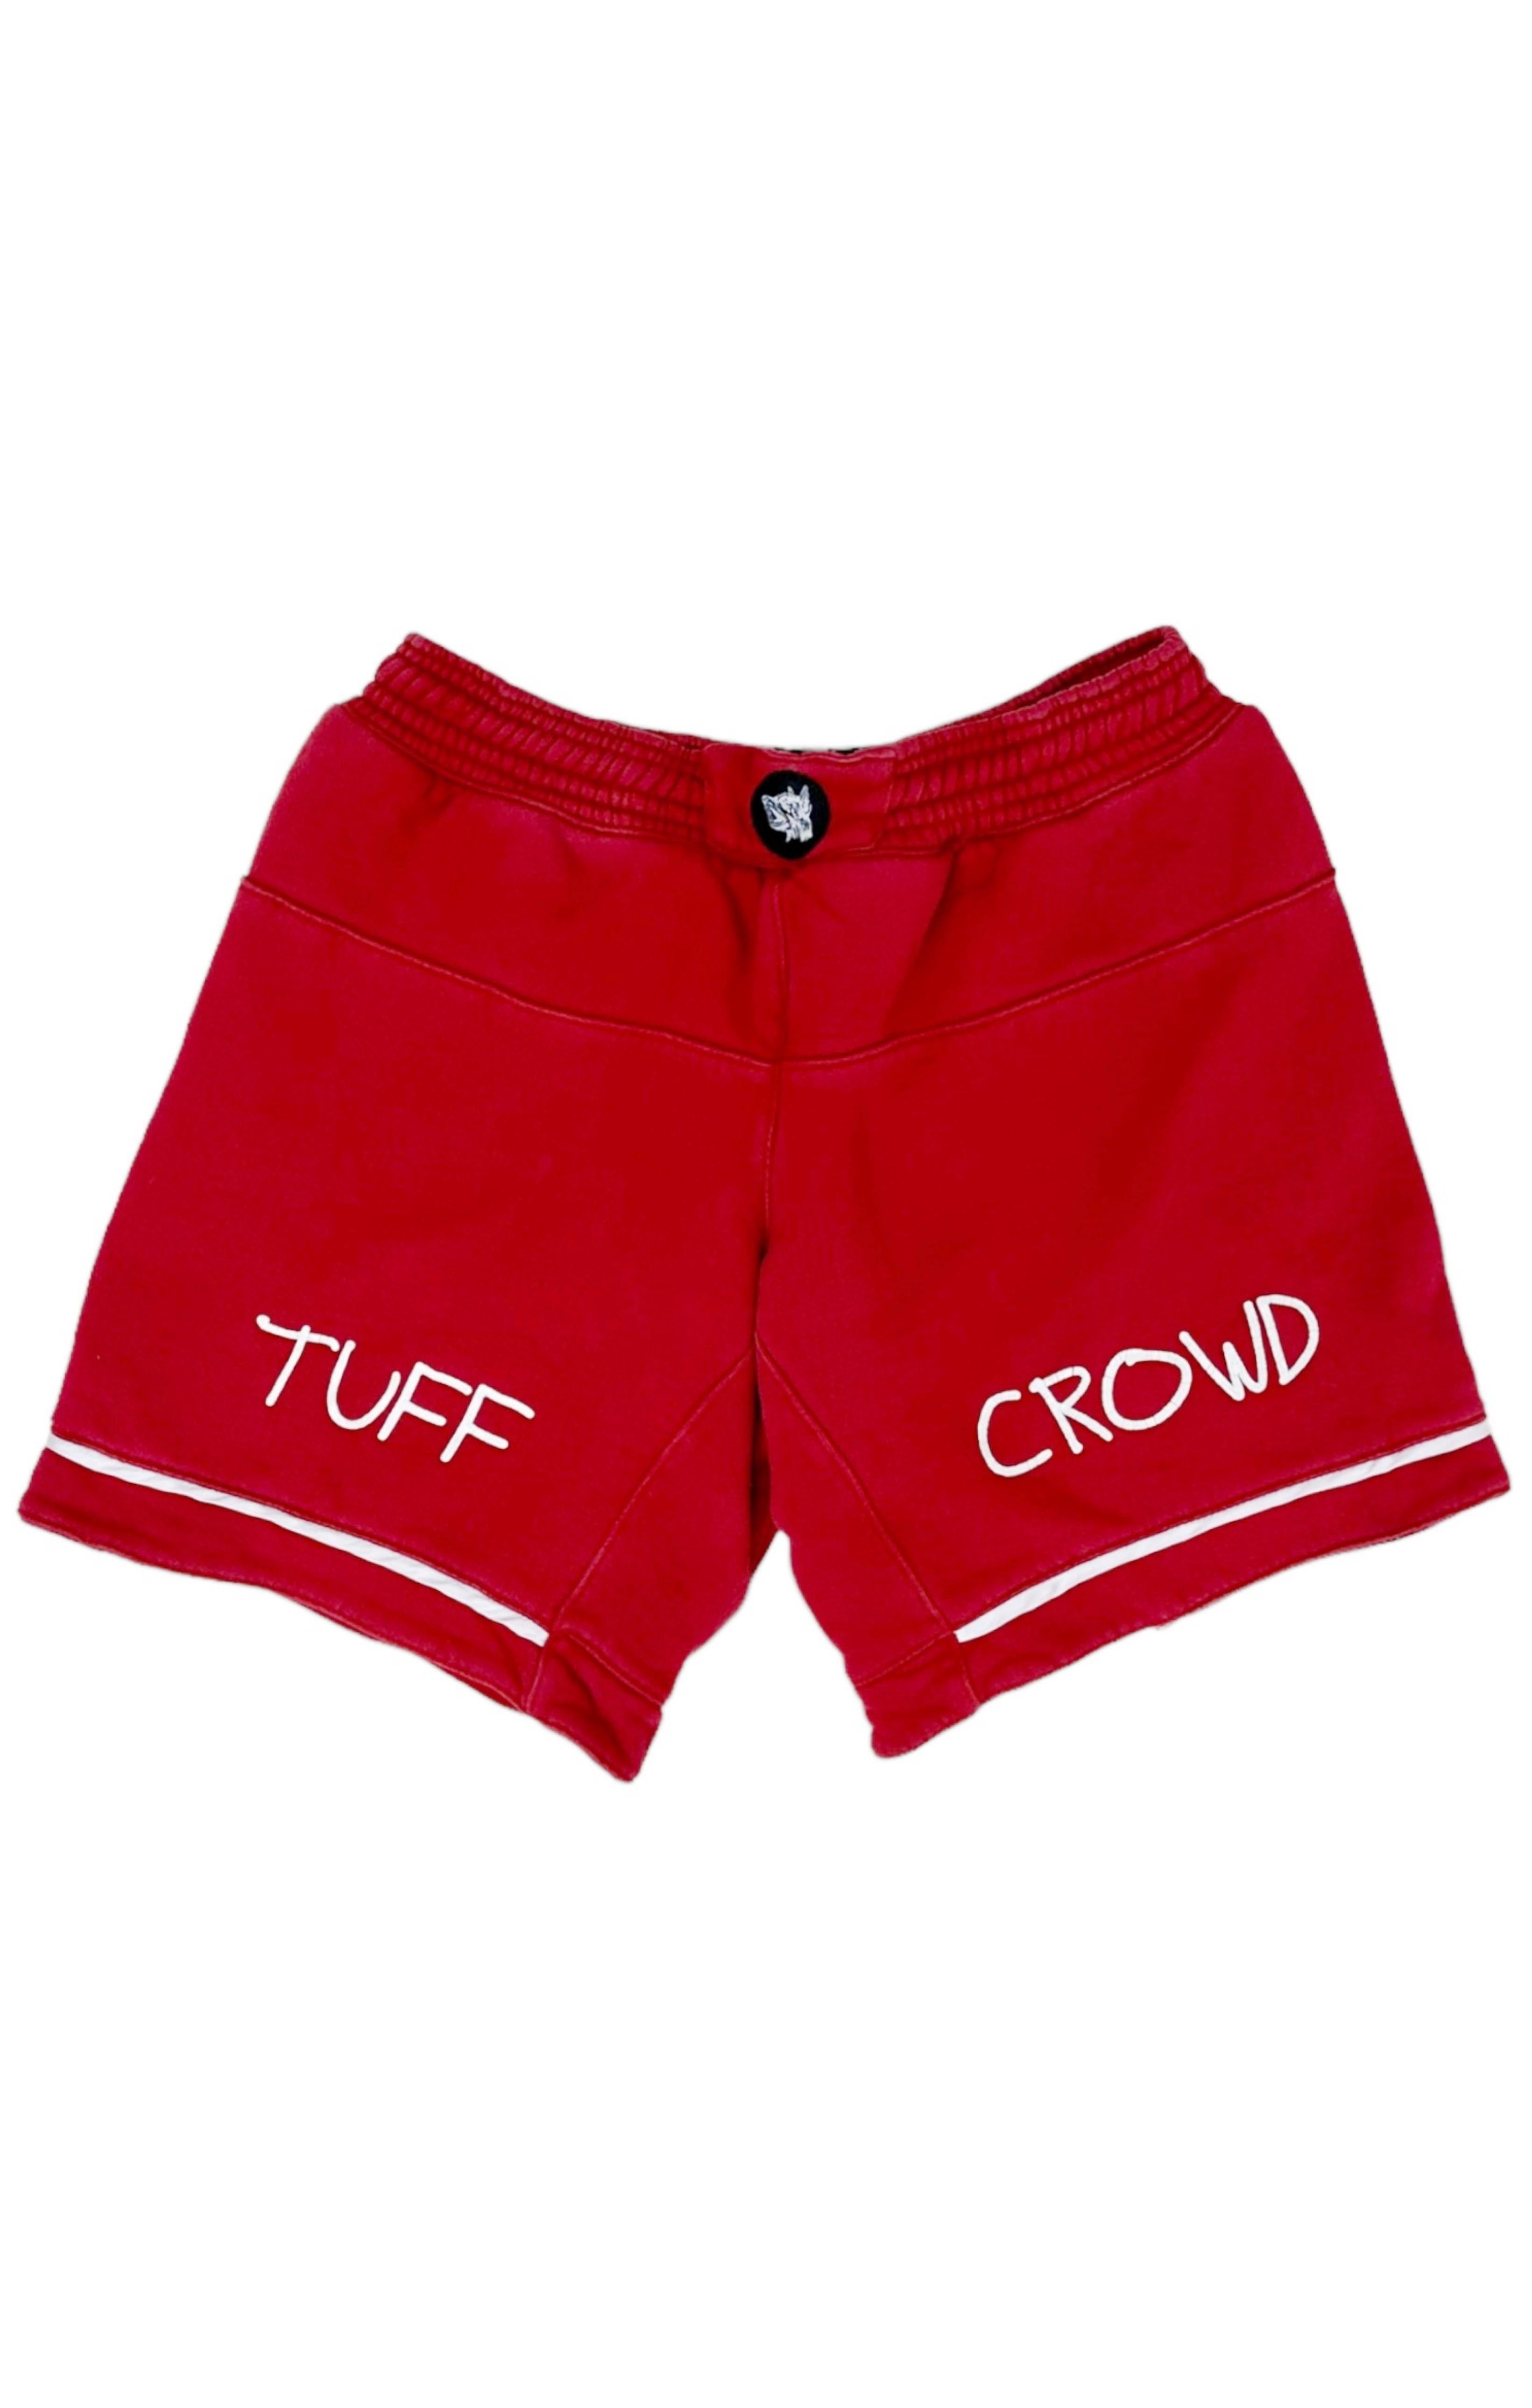 TUFF CROWD  Shorts Size: Men's S